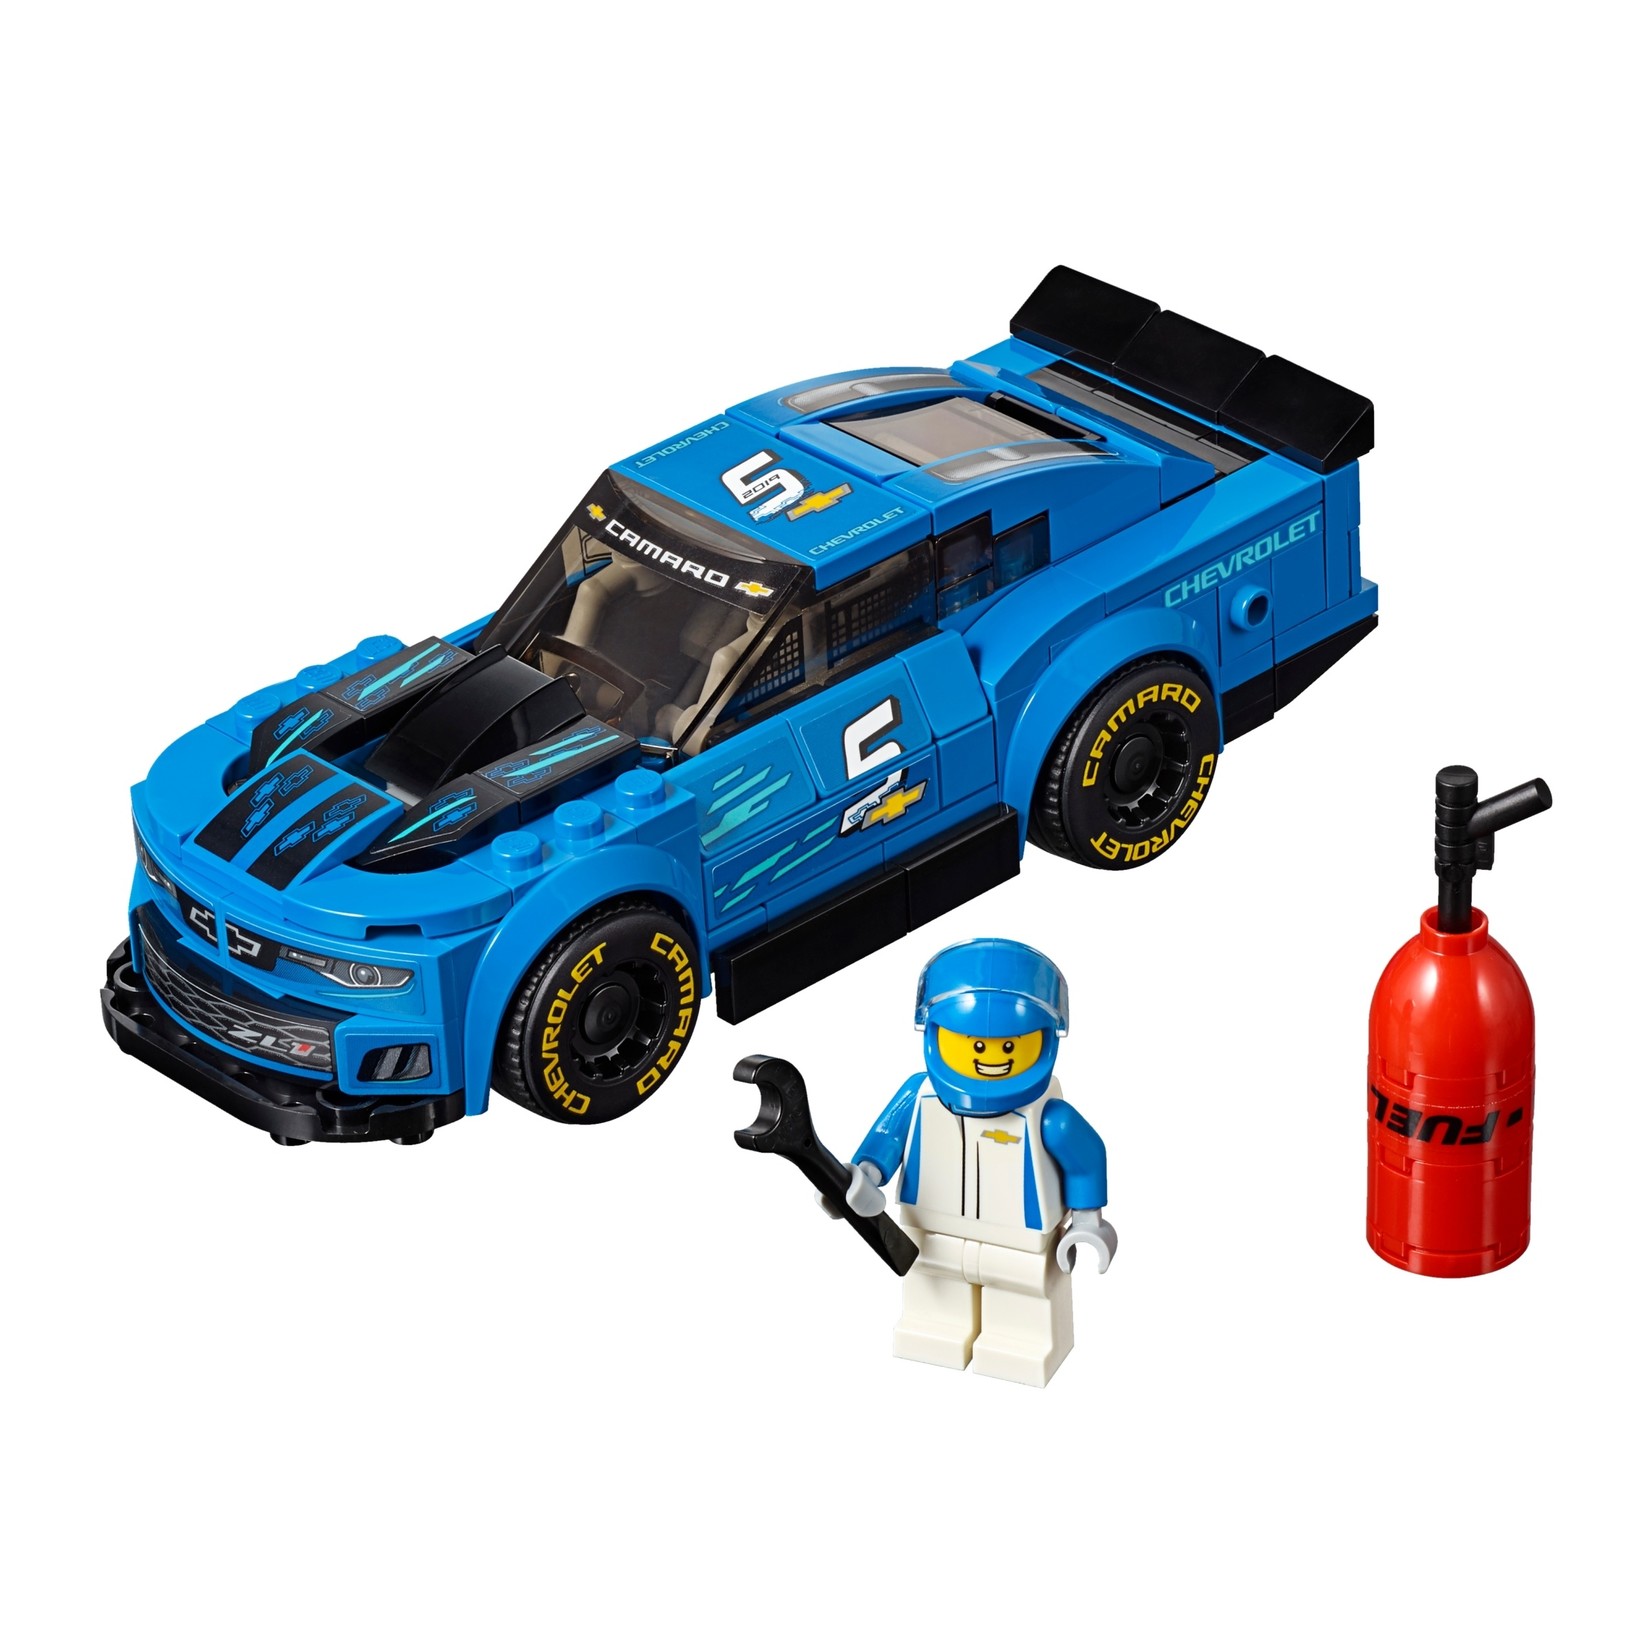 LEGO LEGO Speed Champions Chevrolet Camaro ZL1 Race Car 75891